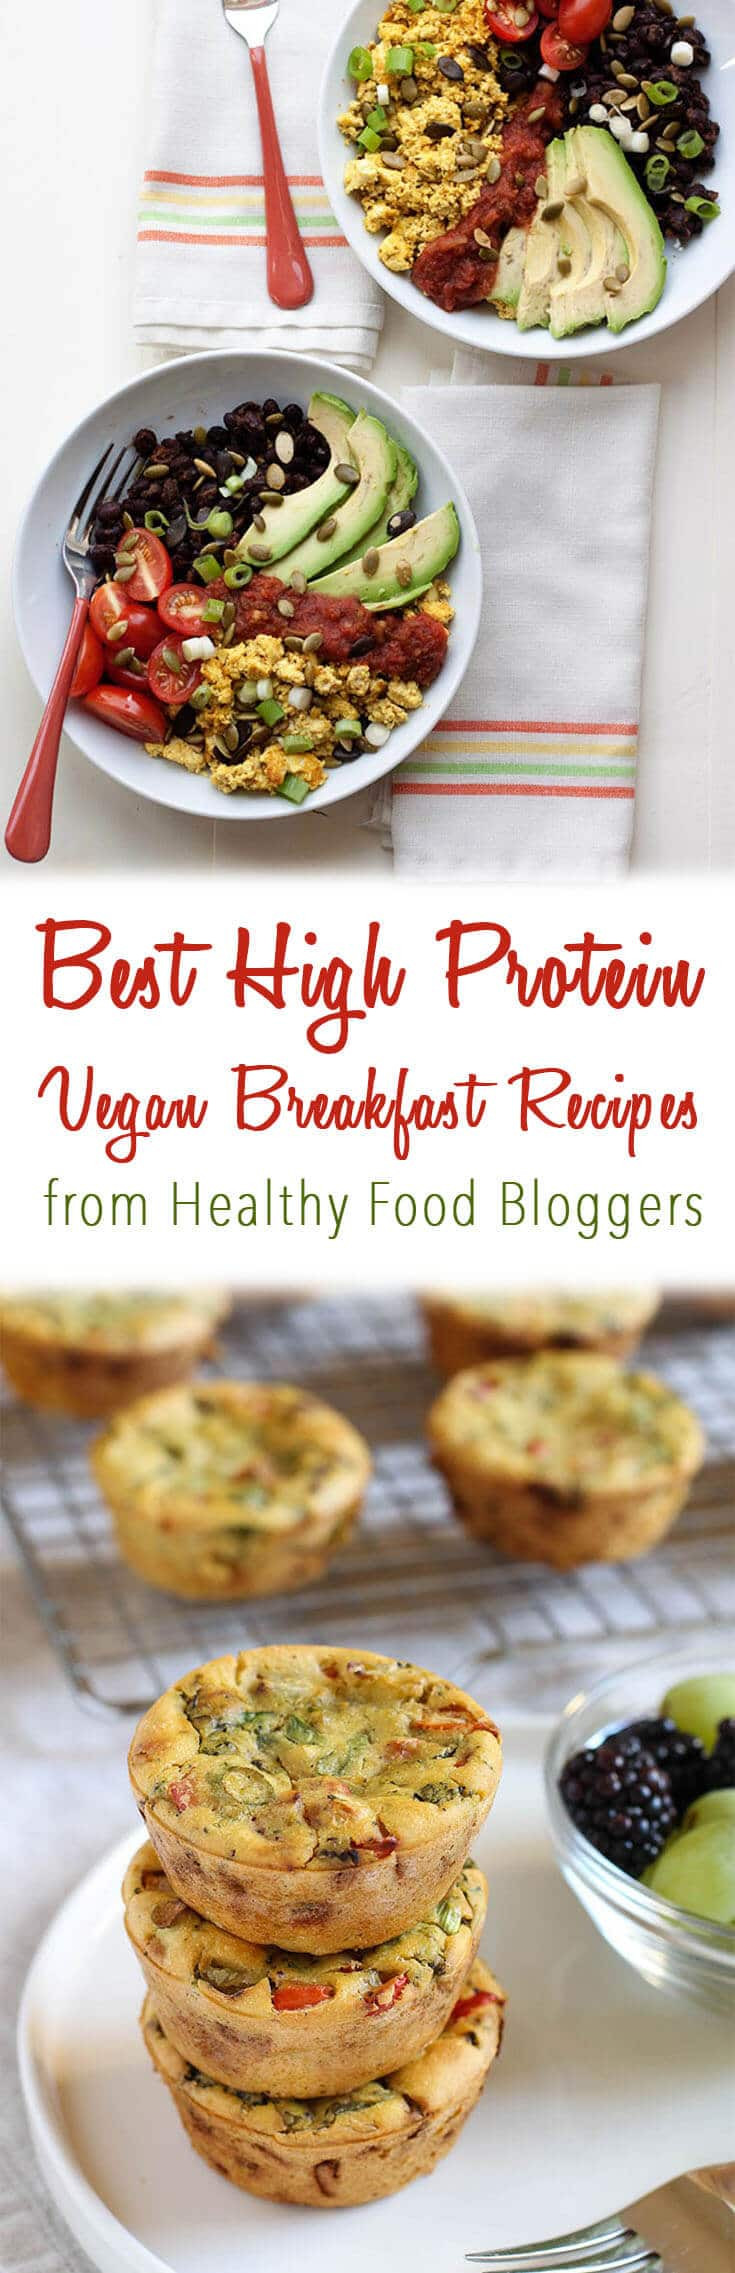 Healthy Vegan Breakfast
 Best High Protein Vegan Breakfast Recipes from Healthy